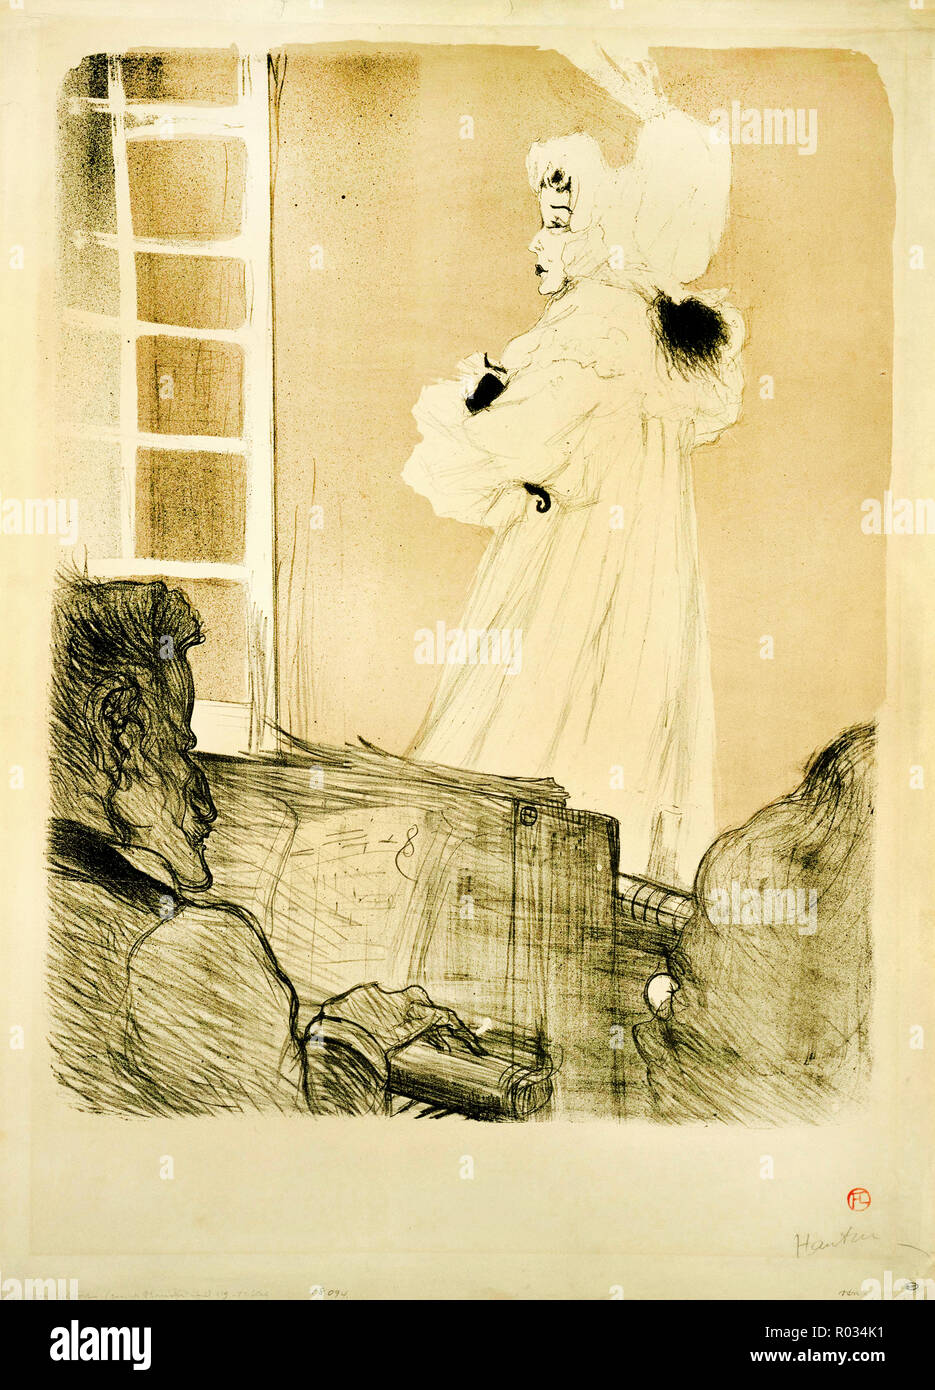 Henri de Toulouse-Lautrec, Miss Mai Belfort, Zustand I, 1895 Farblithographie auf Papier, der Phillips Collection, Washington, D.C., USA. Stockfoto